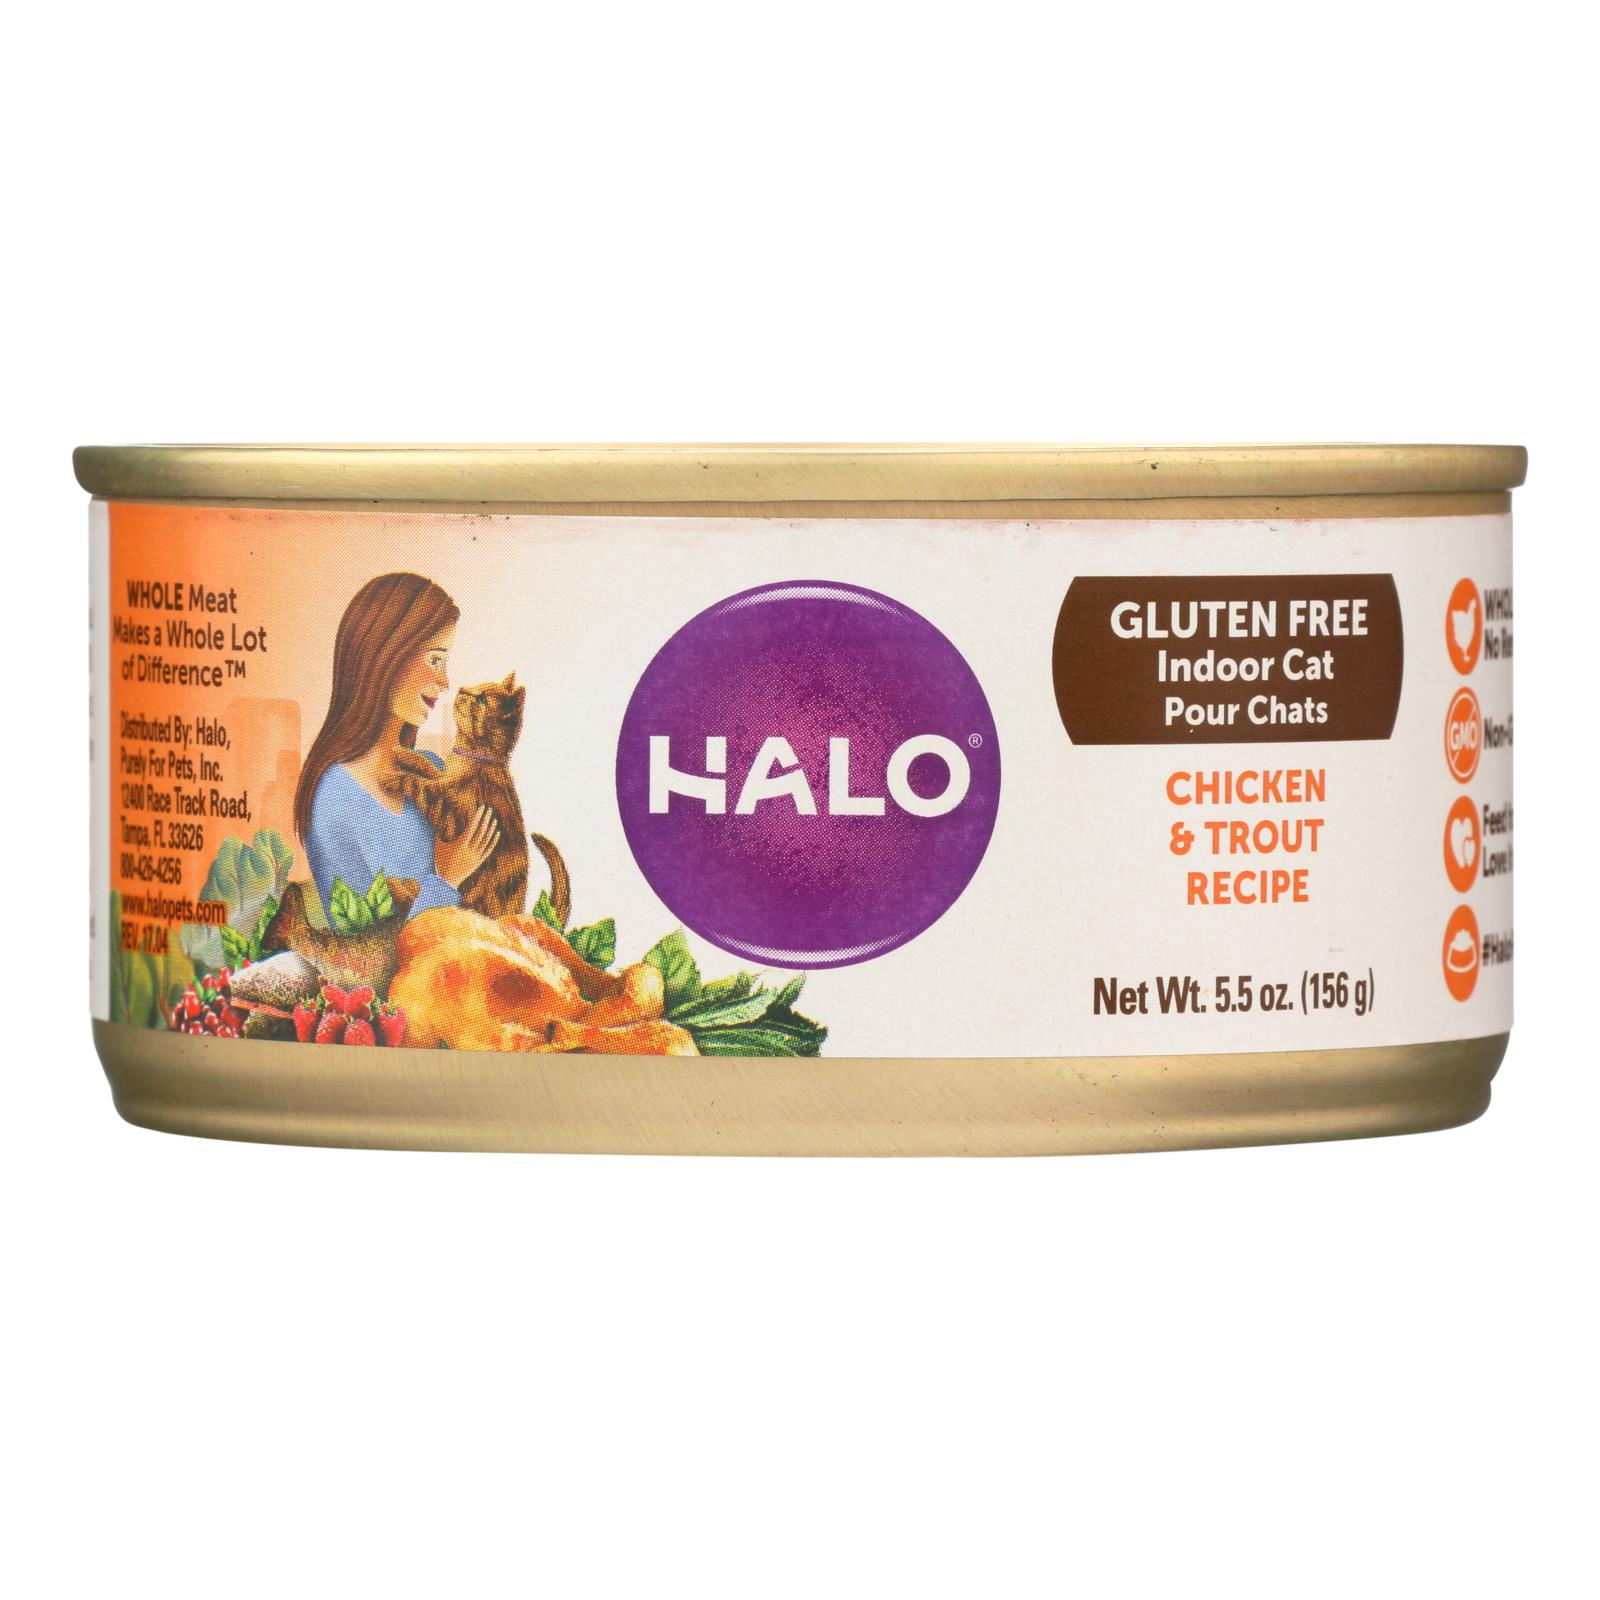 Halo Gluten-Free Indoor Cat Chicken & Trout Recipe - 12개 묶음상품 - 5.5 OZ